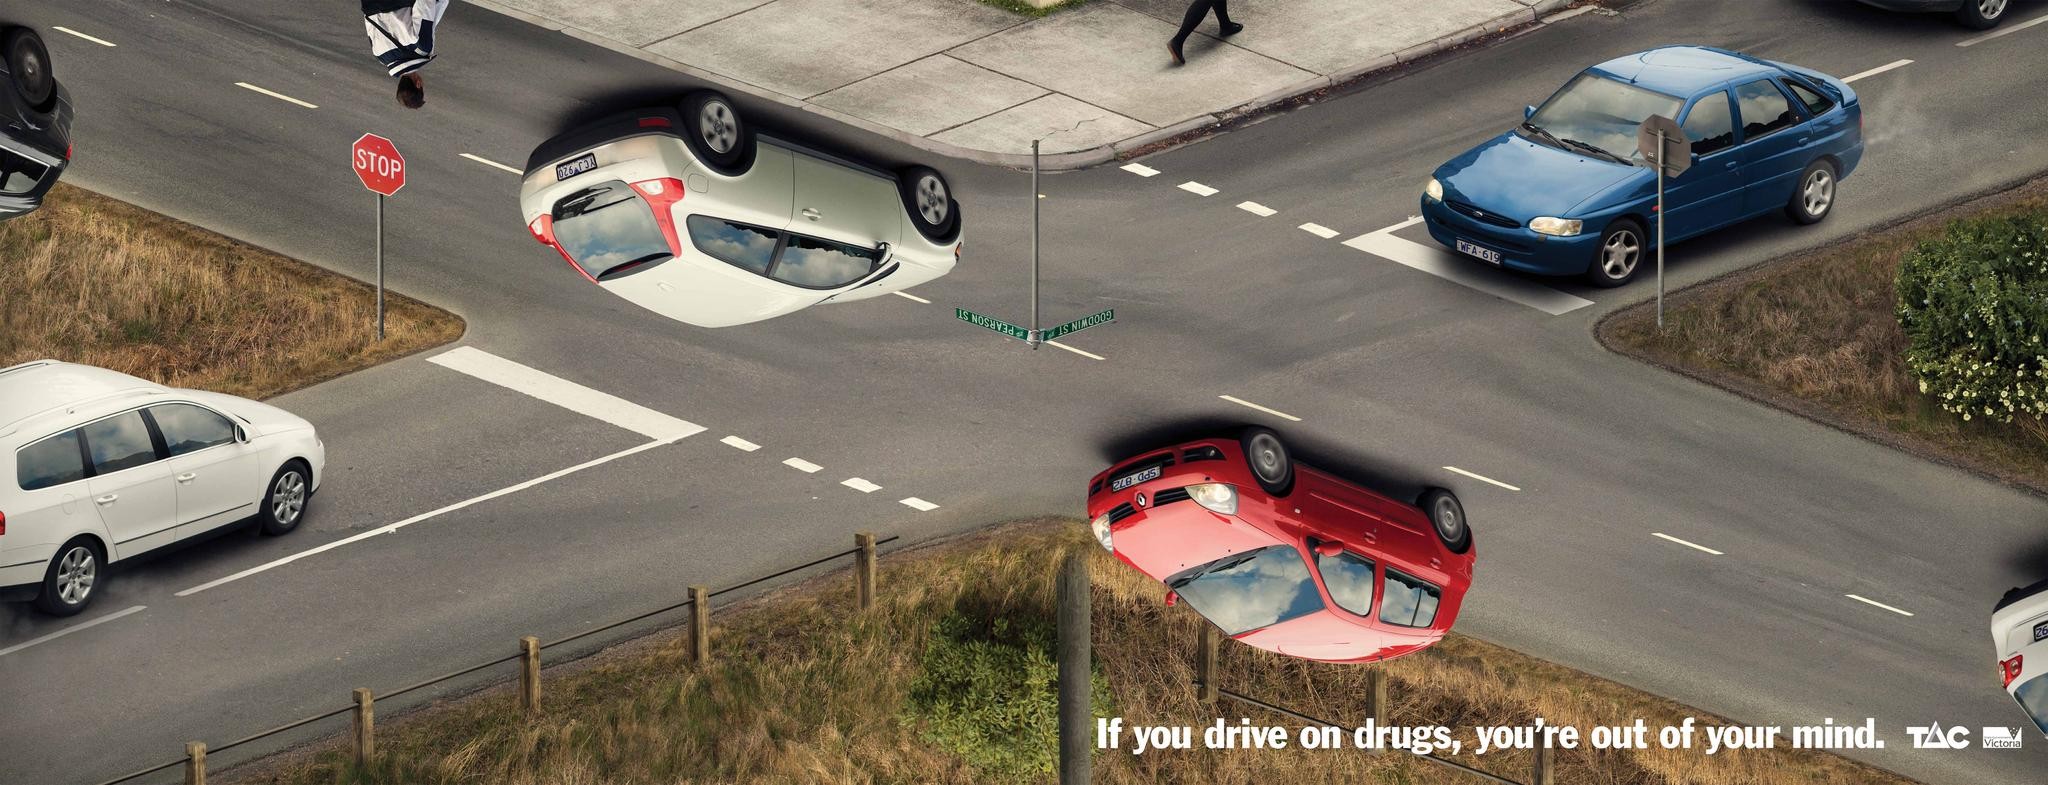 ANTI - DRUG DRIVING